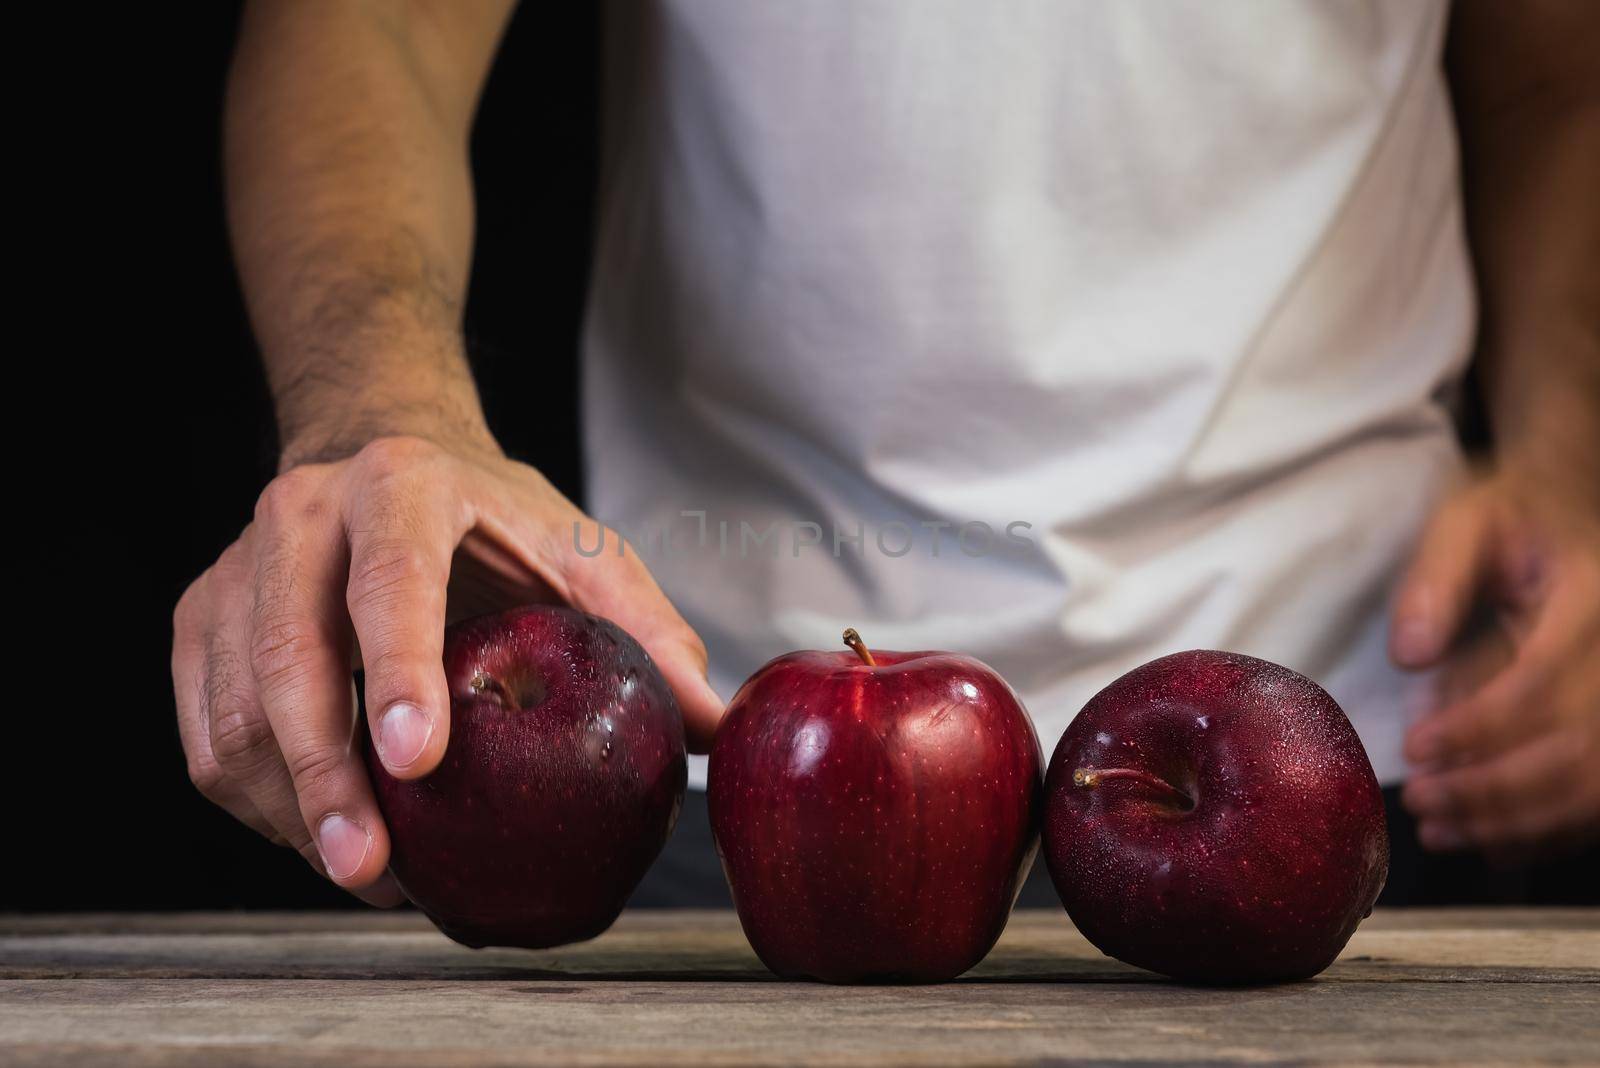 the man holding apples on dark background by Wmpix